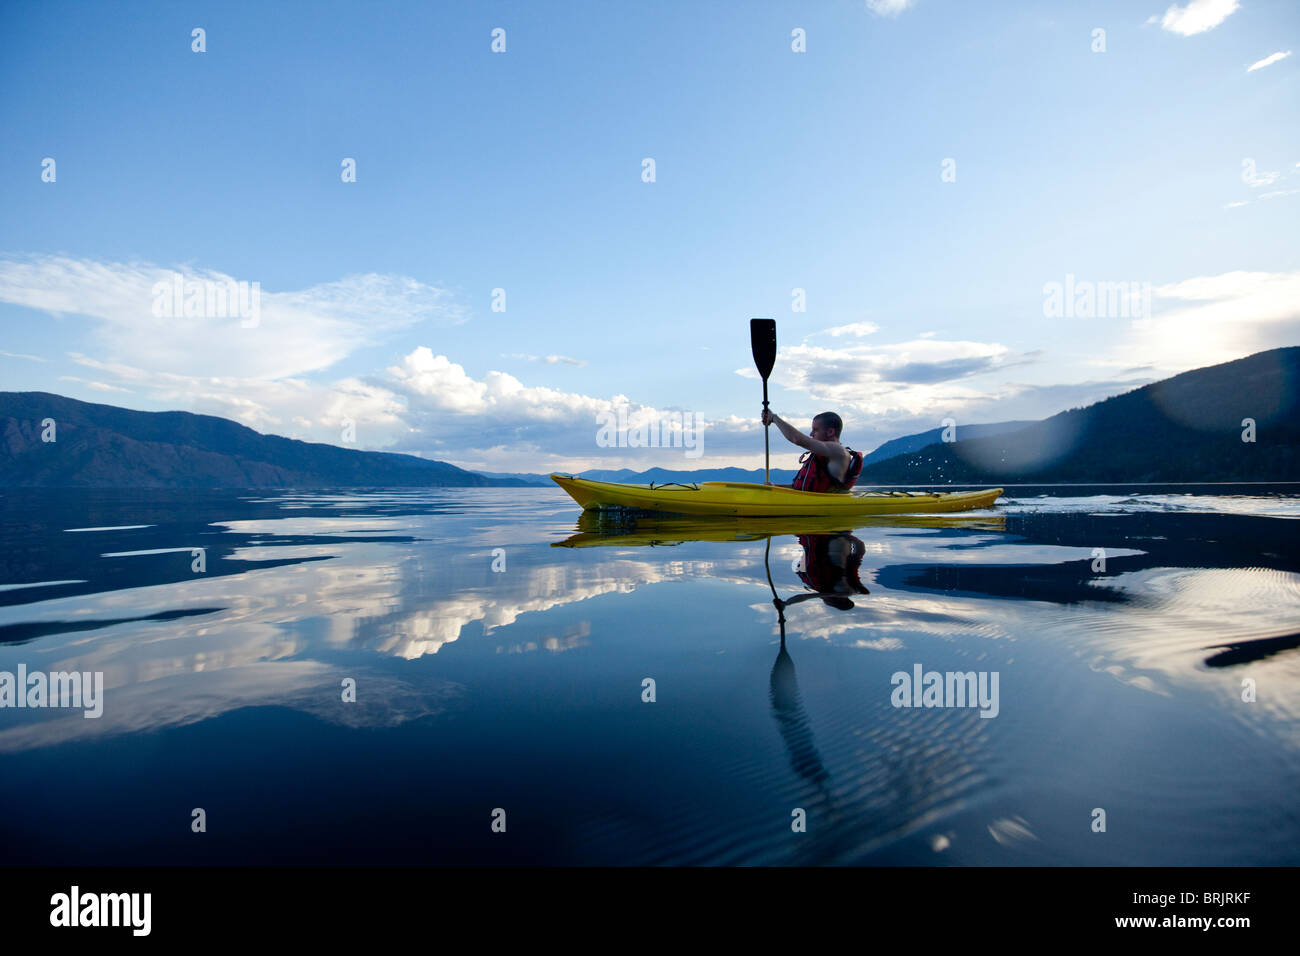 Young man paddles yellow kayak on lake. Stock Photo